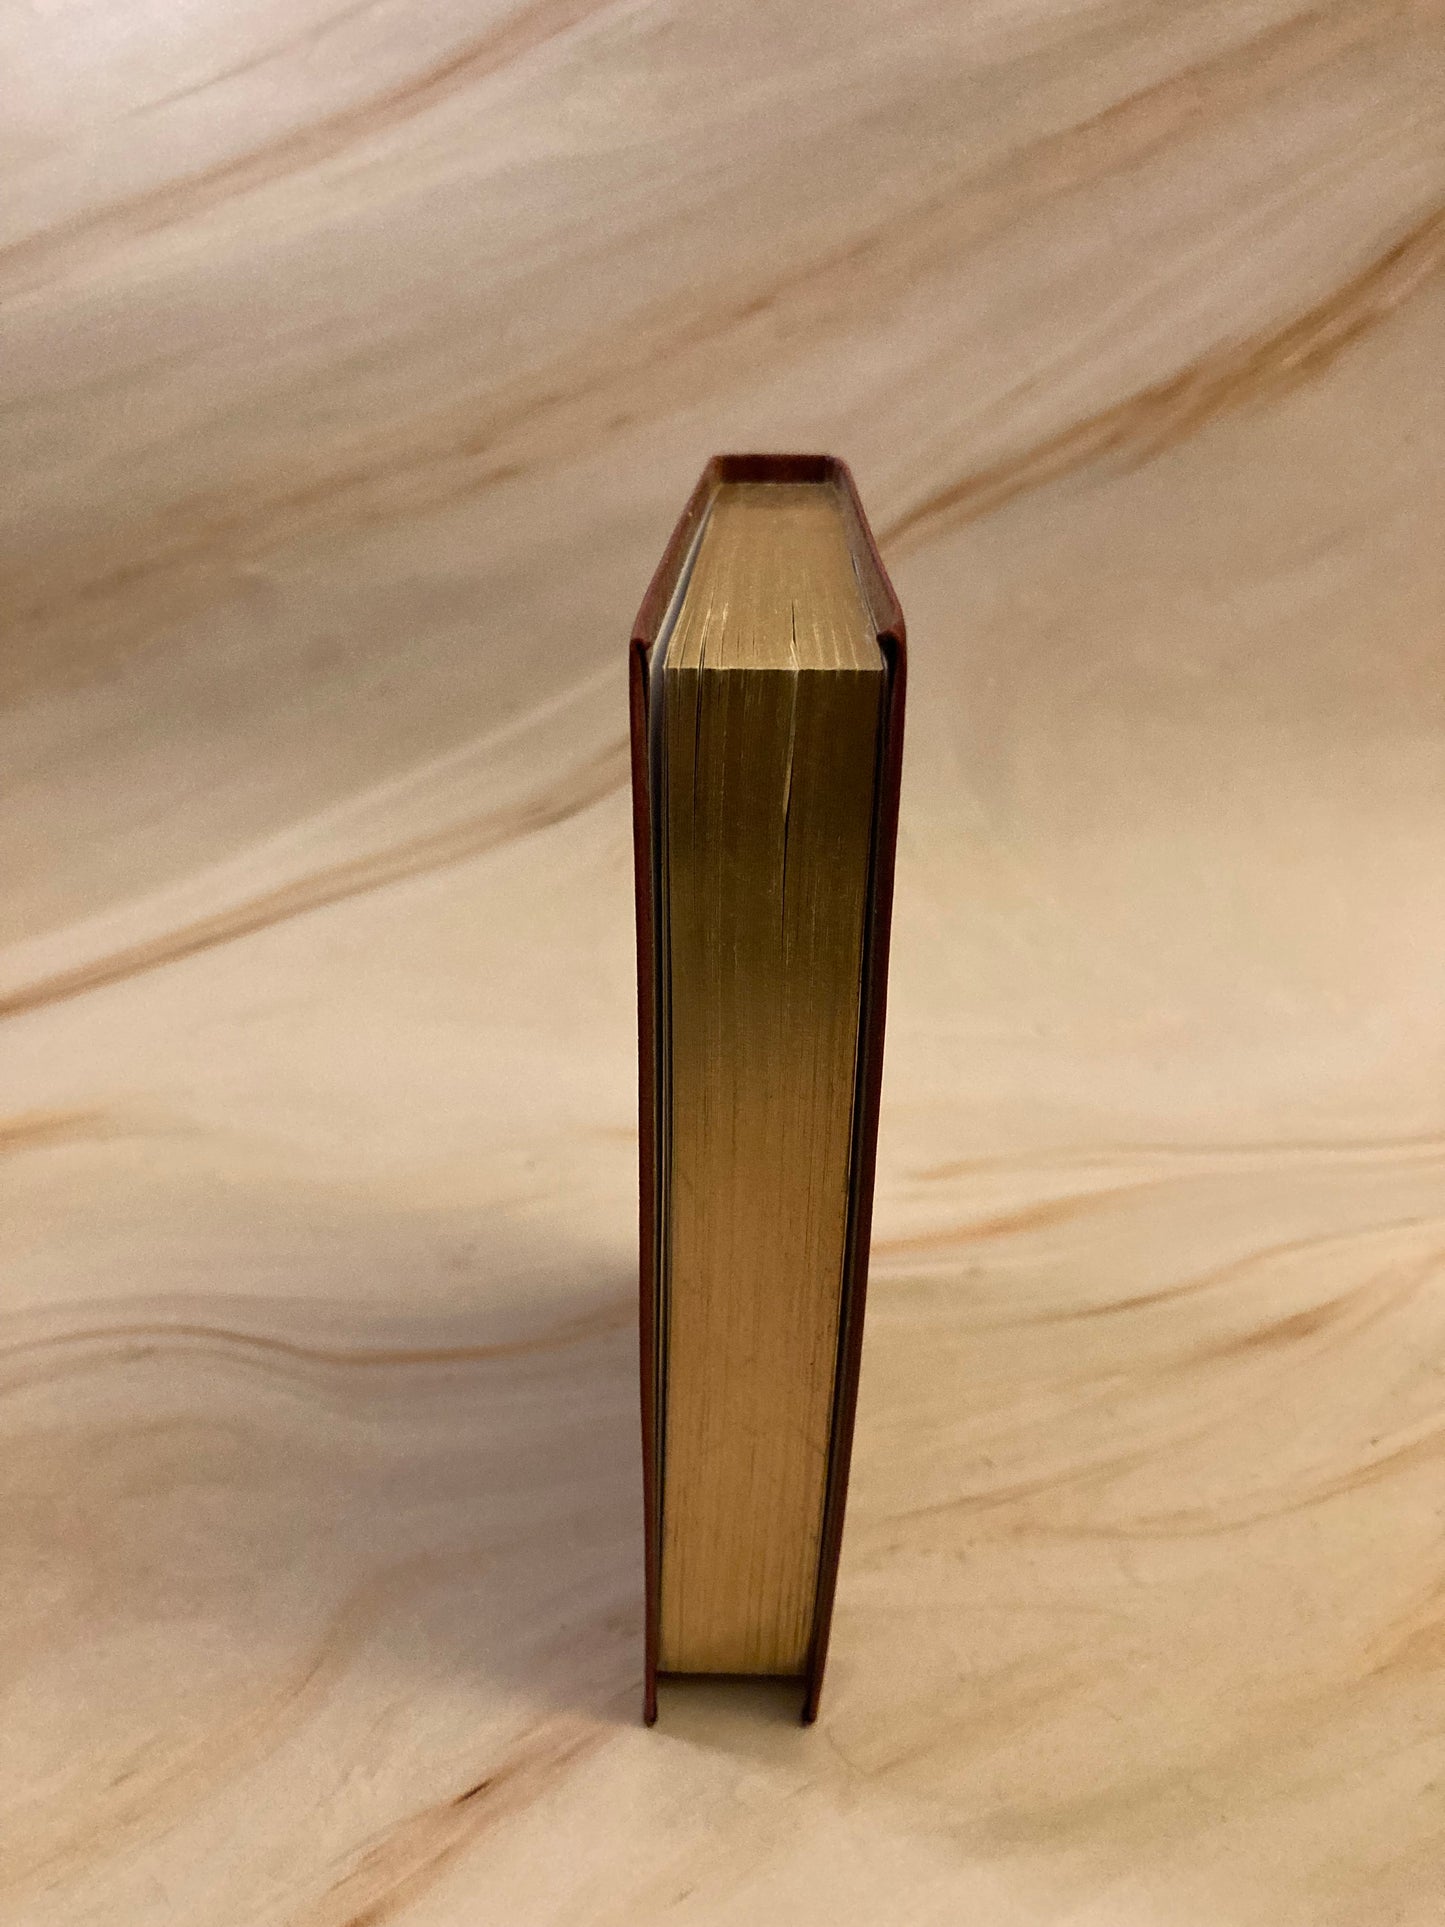 2015 Gideon Pocket Size Bible Burgundy Red Bible - (Ref x217)